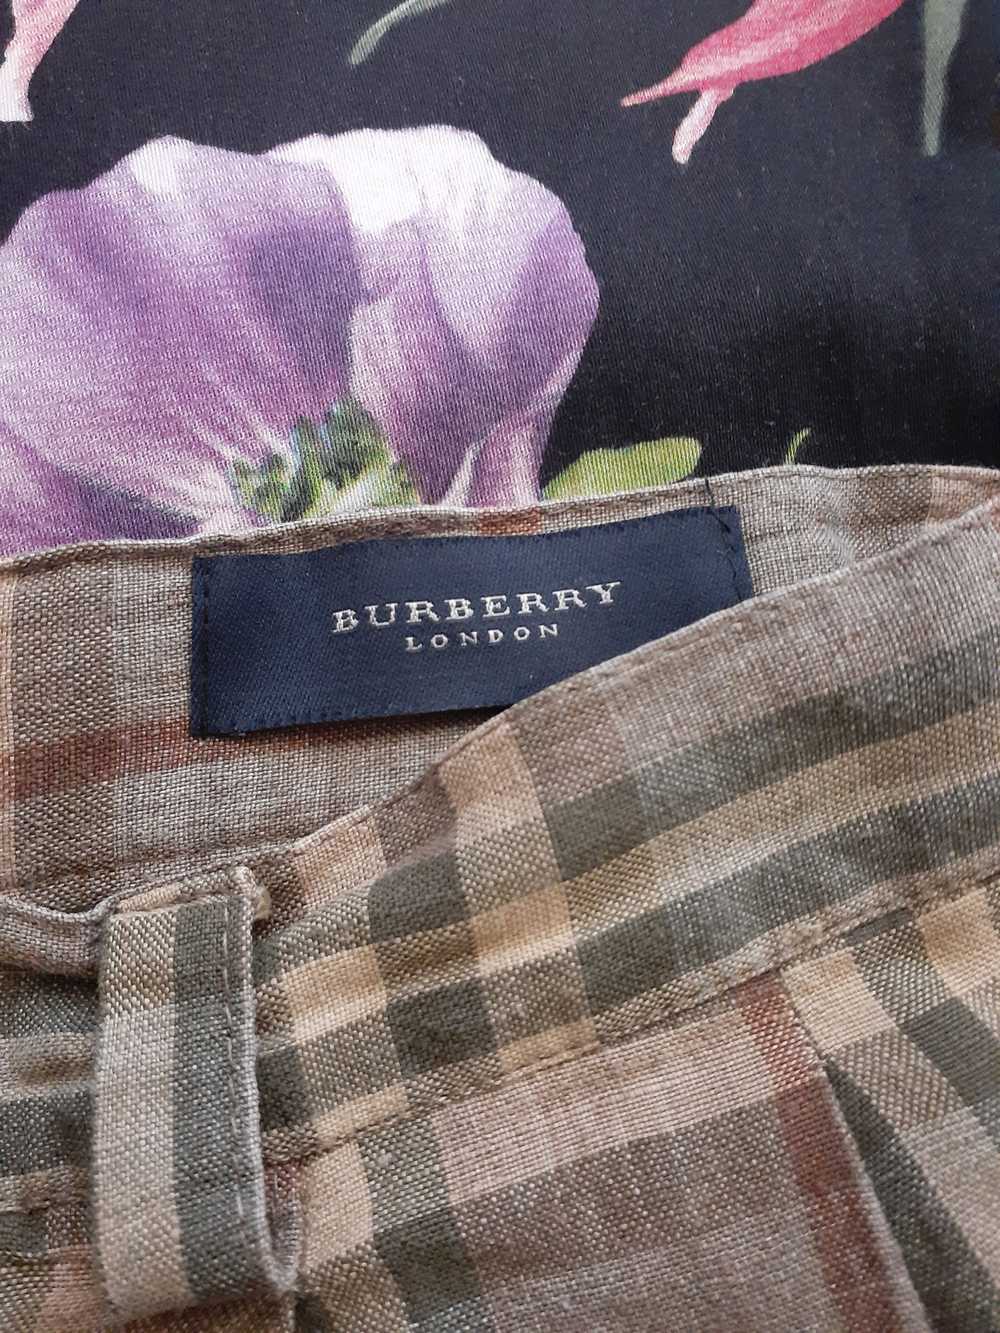 Burberry Burberry London plaid shorts - image 2